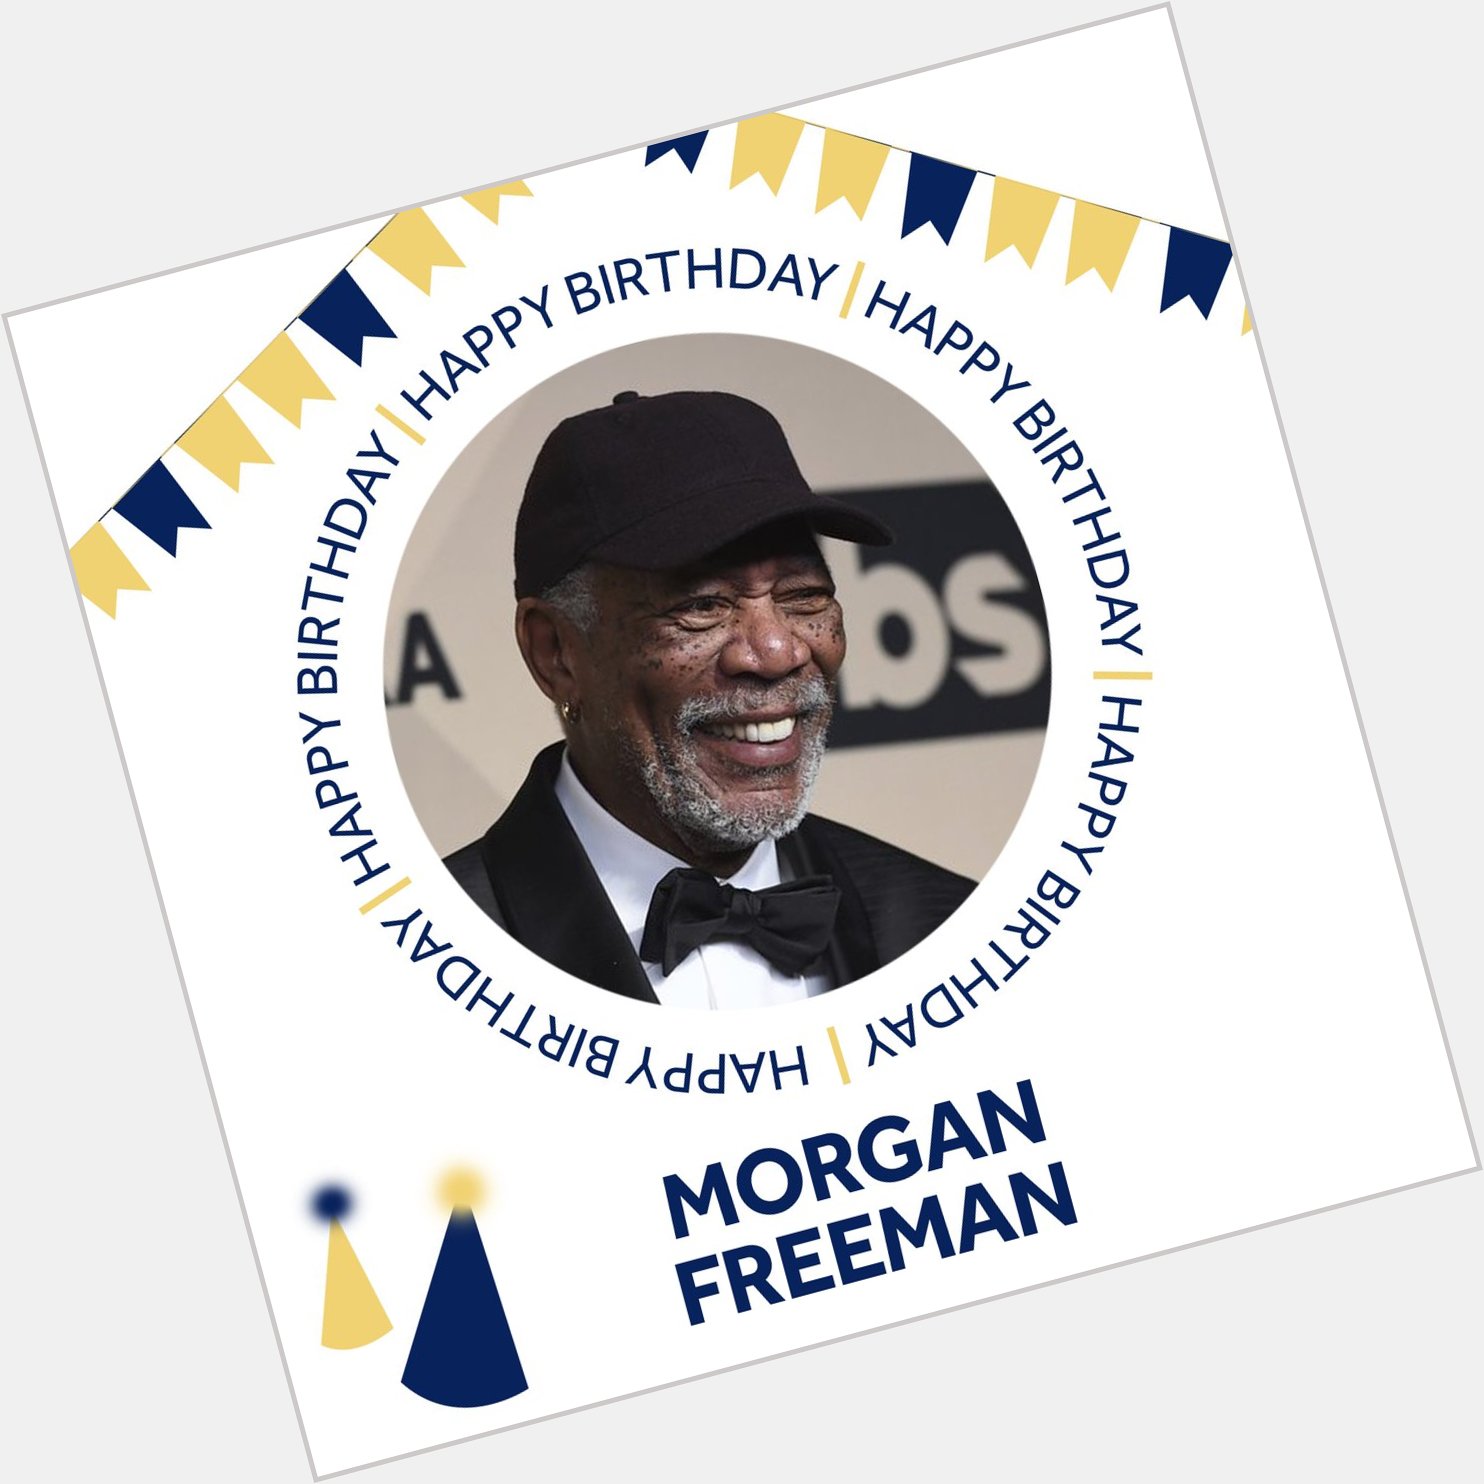 Morgan Freeman turned 85-years-old today! Everyone wish him a very Happy Birthday! 